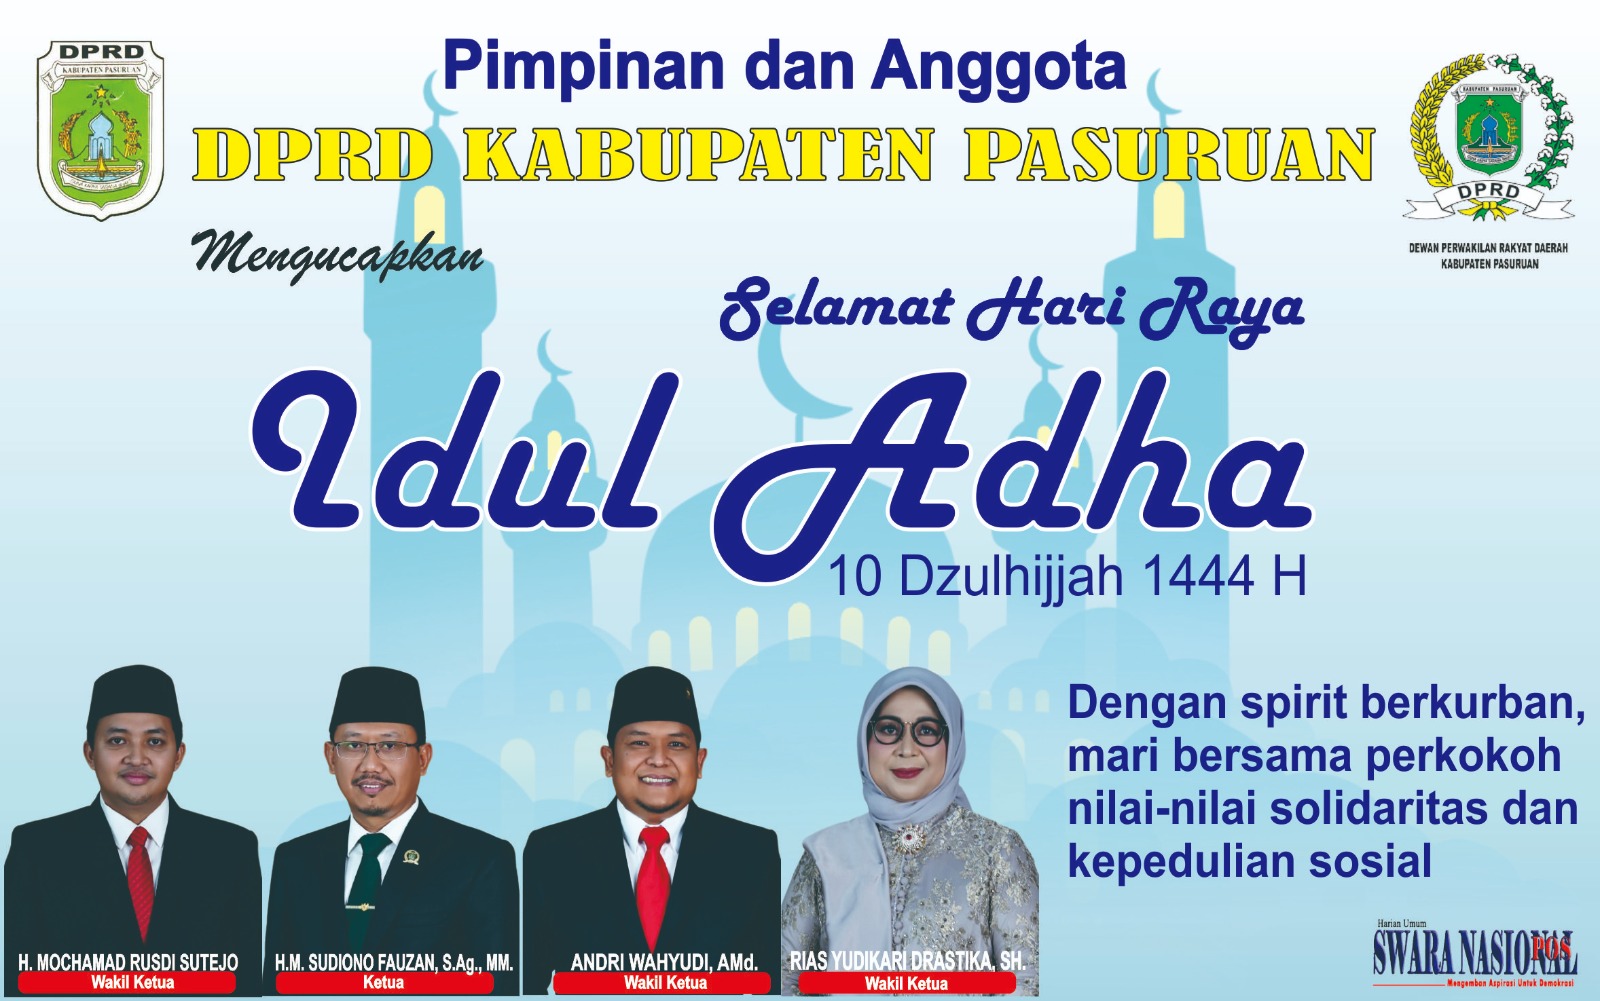 Ucapan Selamat Hari Raya Idul Adha 10 Dzulhijjah 1444 H dari DPRD Kabupaten Pasuruan